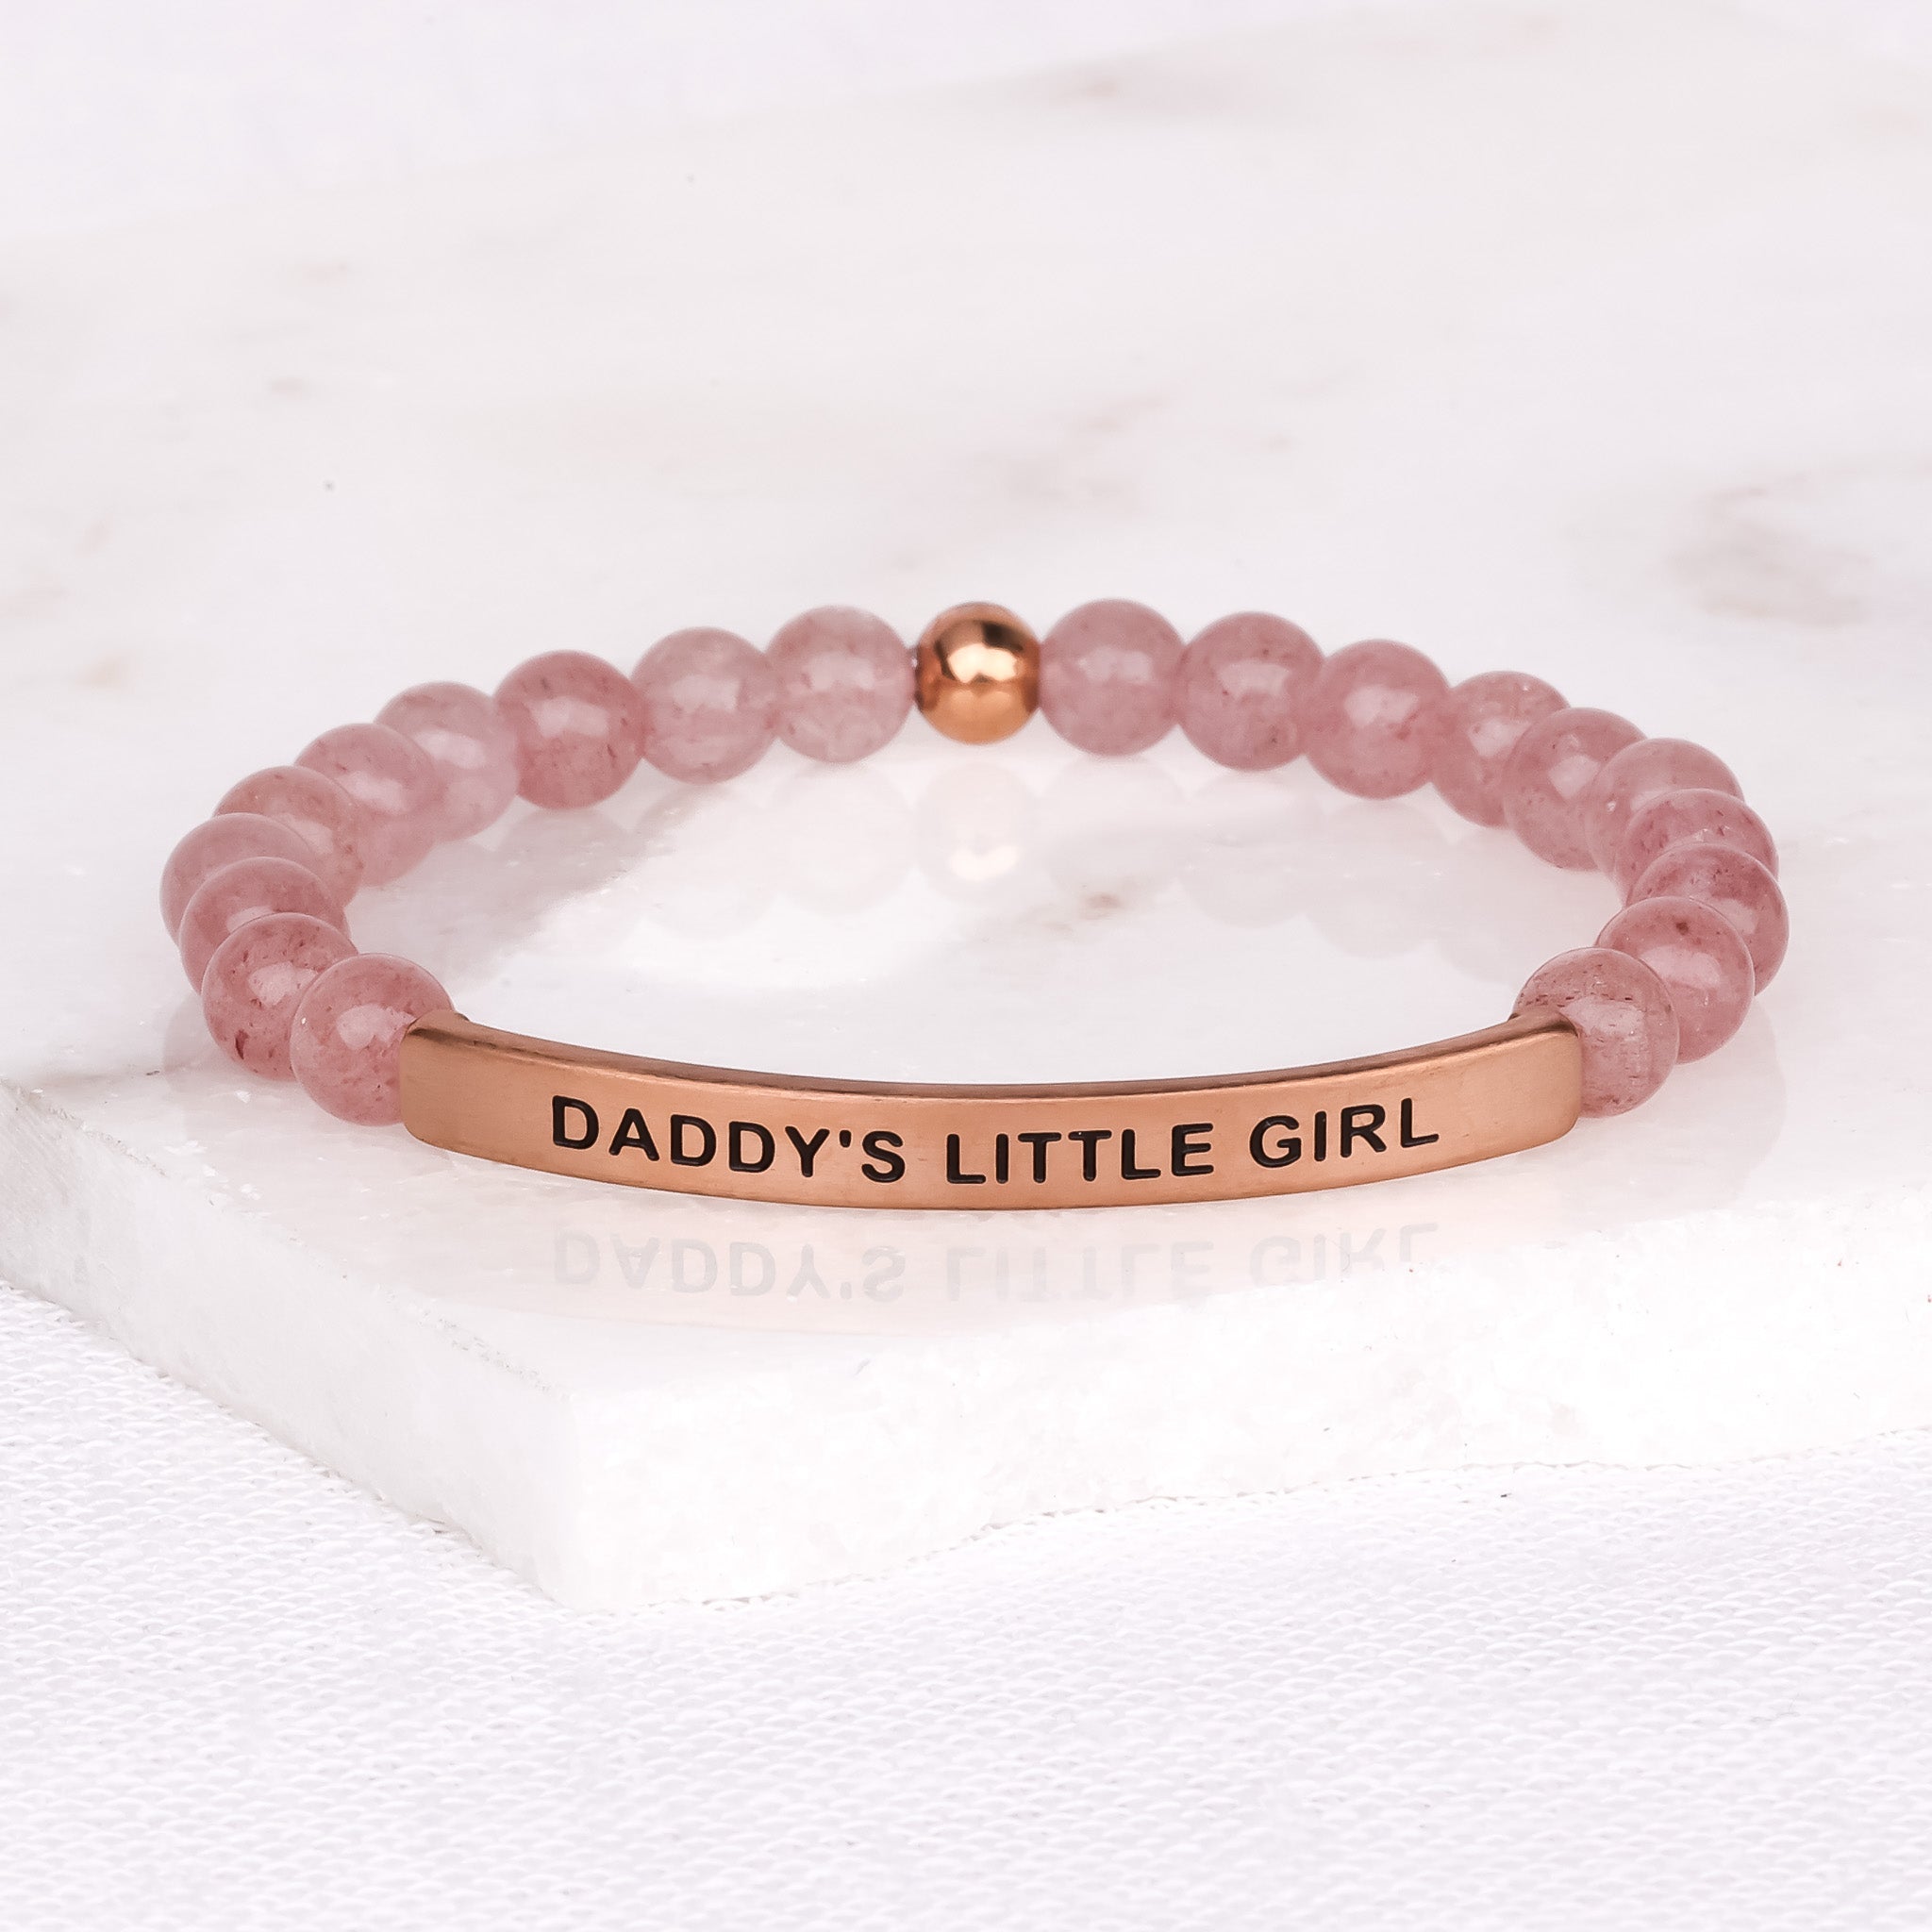 Inspire Me Bracelets - Daddy's Little Girl-Inspirational Bead Bracelet Pink Quartz / Medium (7.1in - 8in) Average Man Size